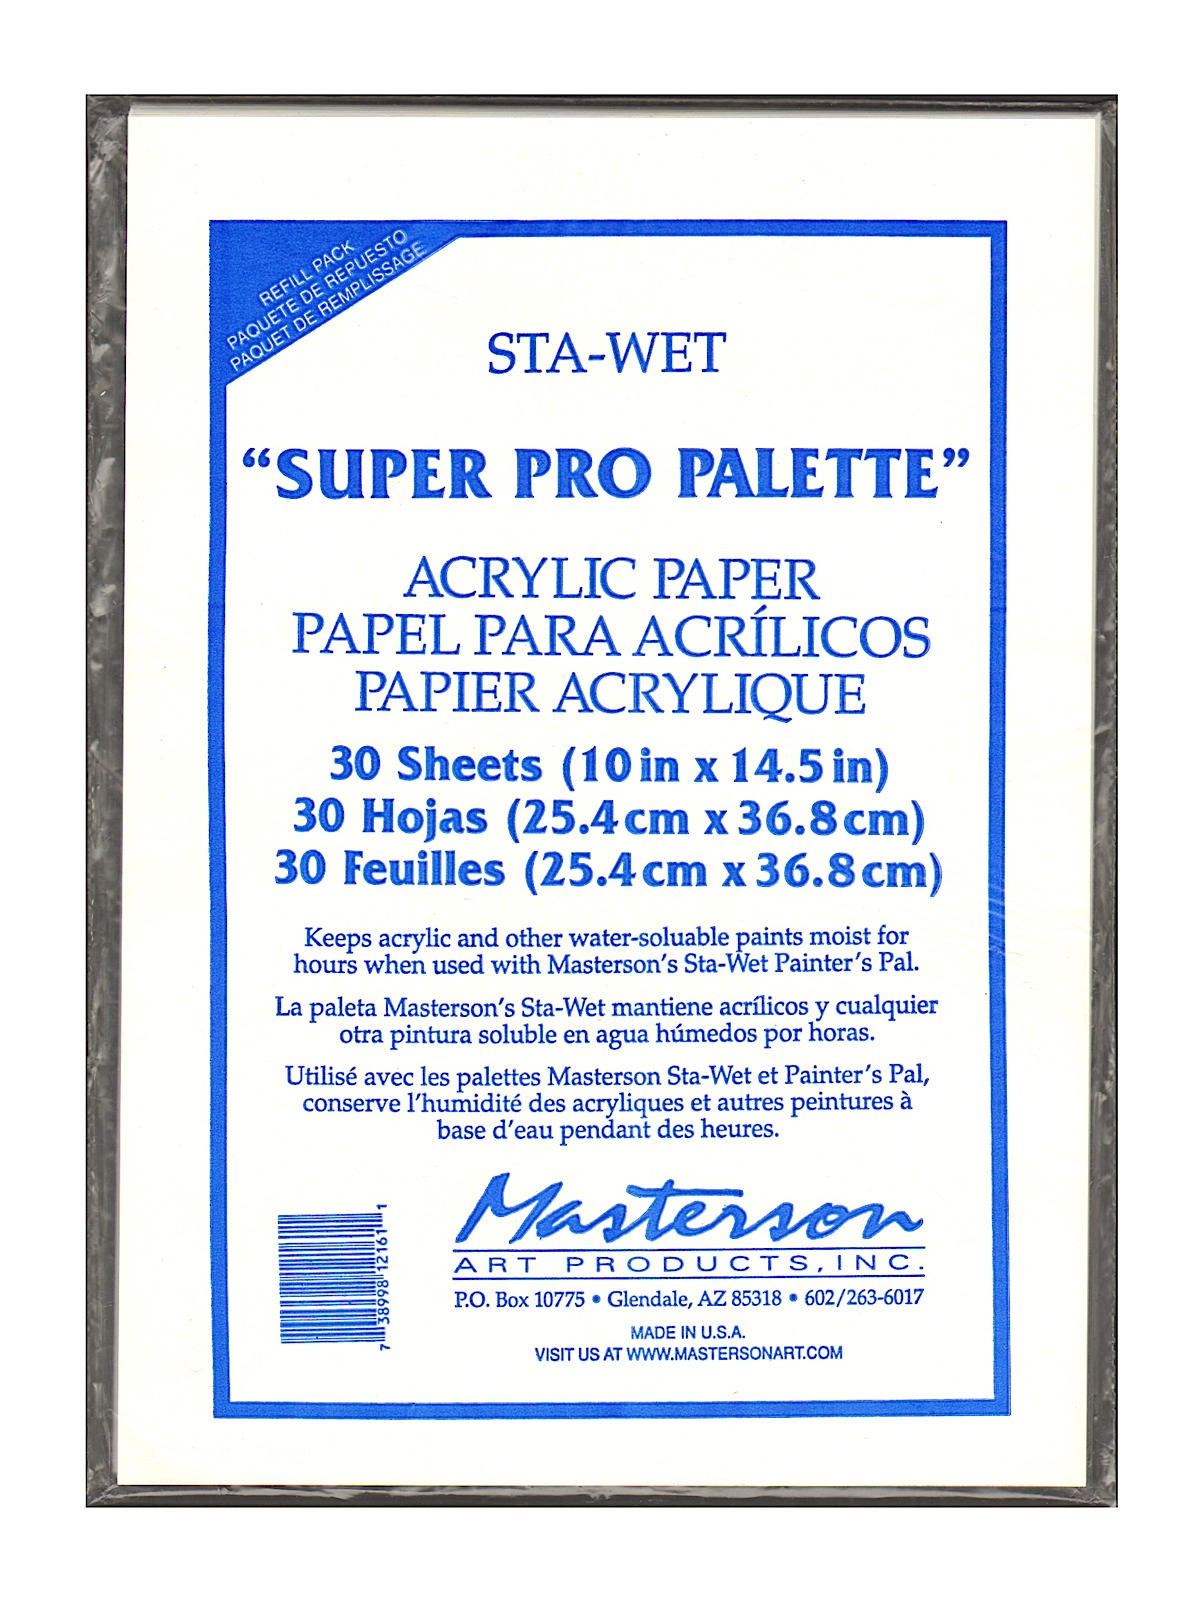 Sta-wet Super Pro Palette Acrylic Film Refill